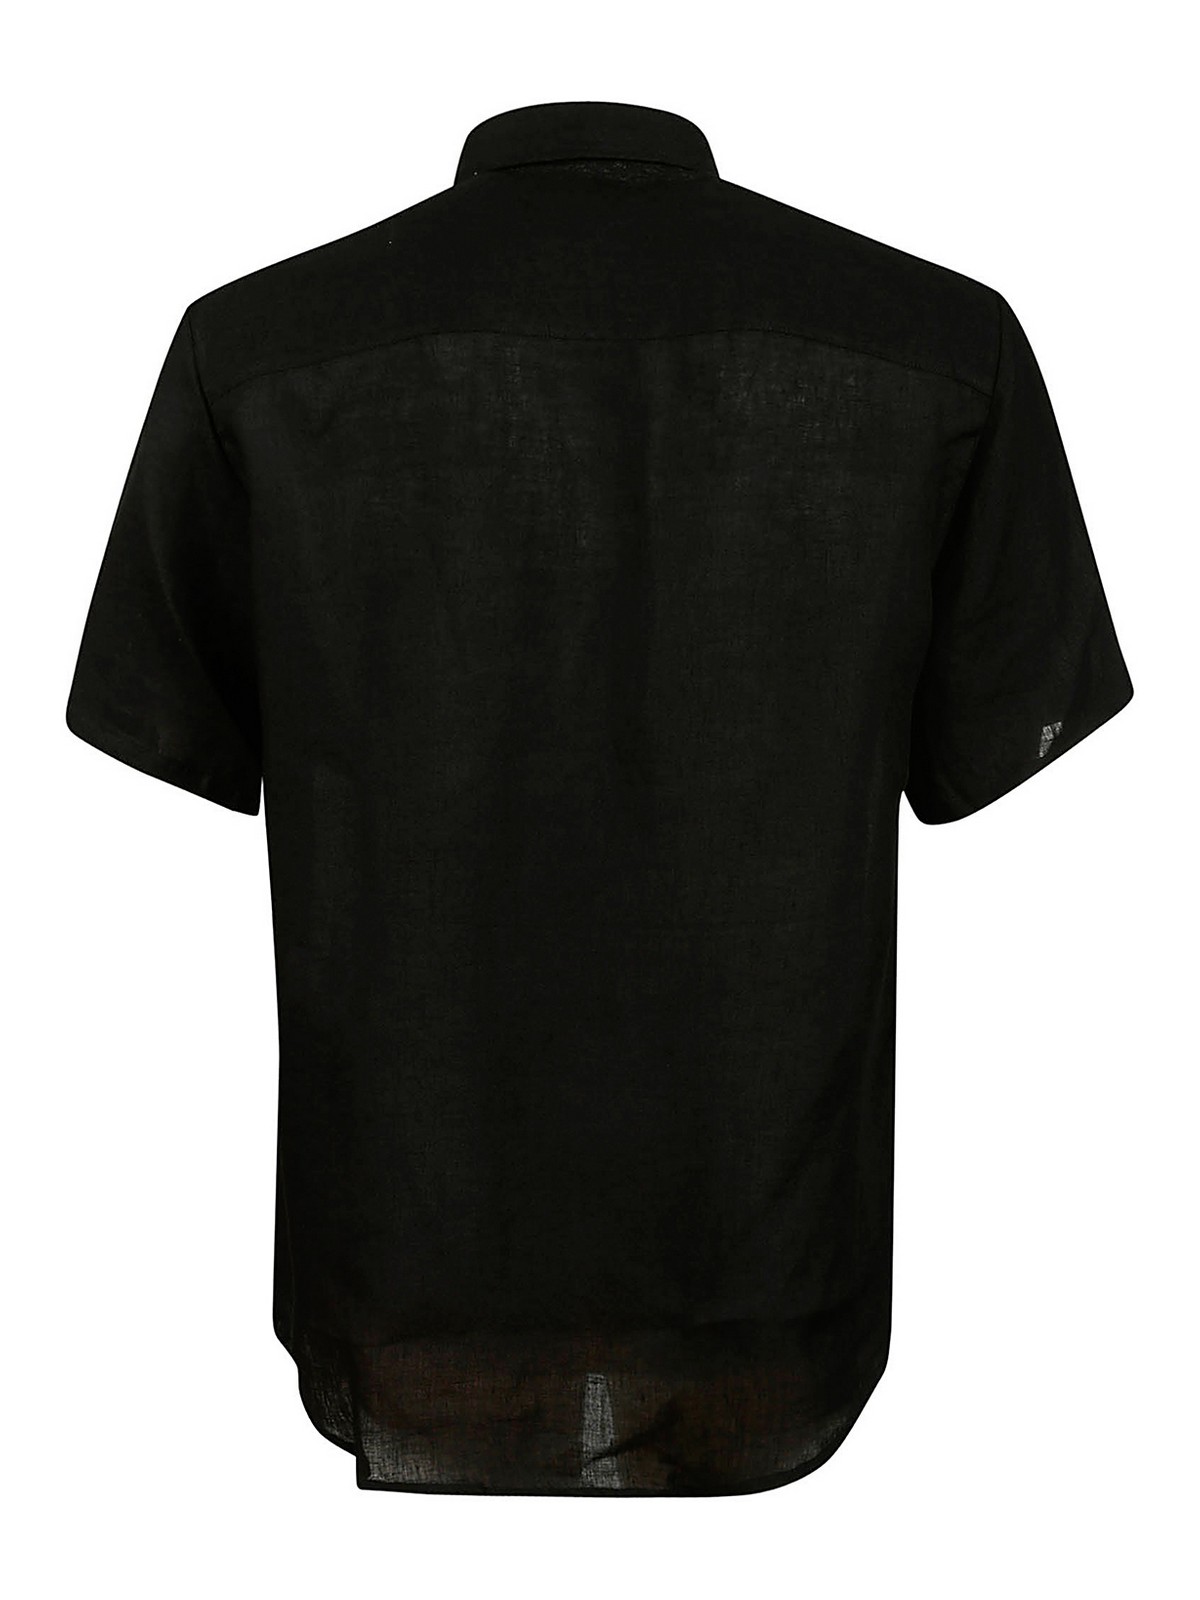 Shirts A.P.C. - Bellini chemisette logo - LIAEKH12551LZZ | iKRIX.com